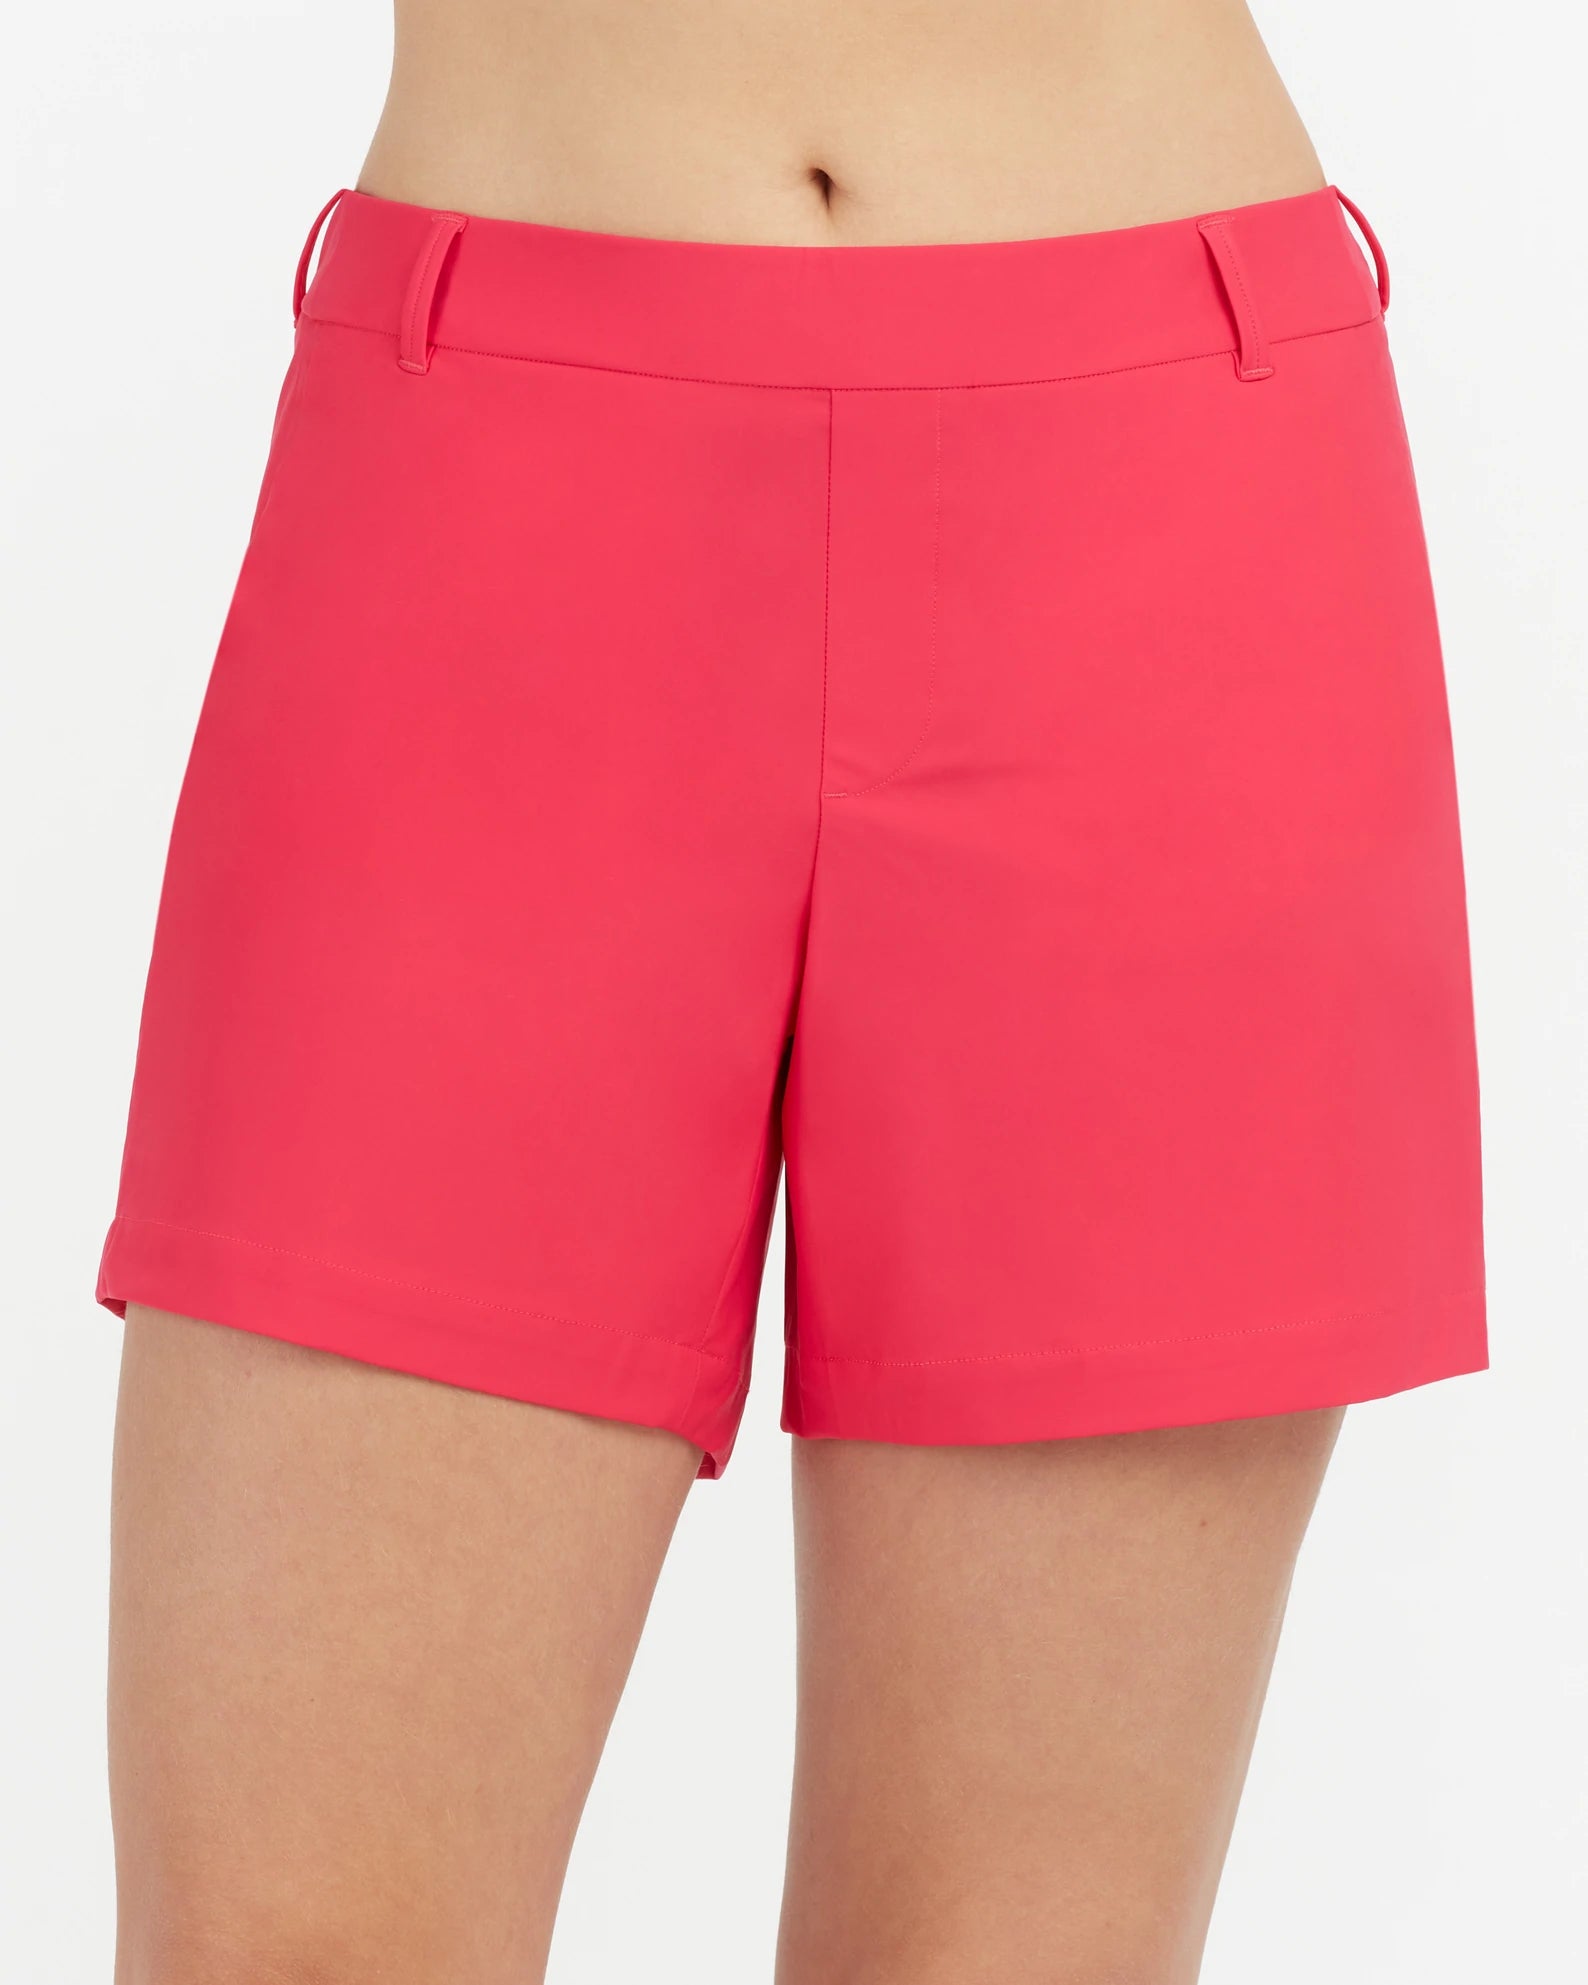 Spanx Sunshine Shorts 4” Pull On 4-Way Stretch Size L Large Black